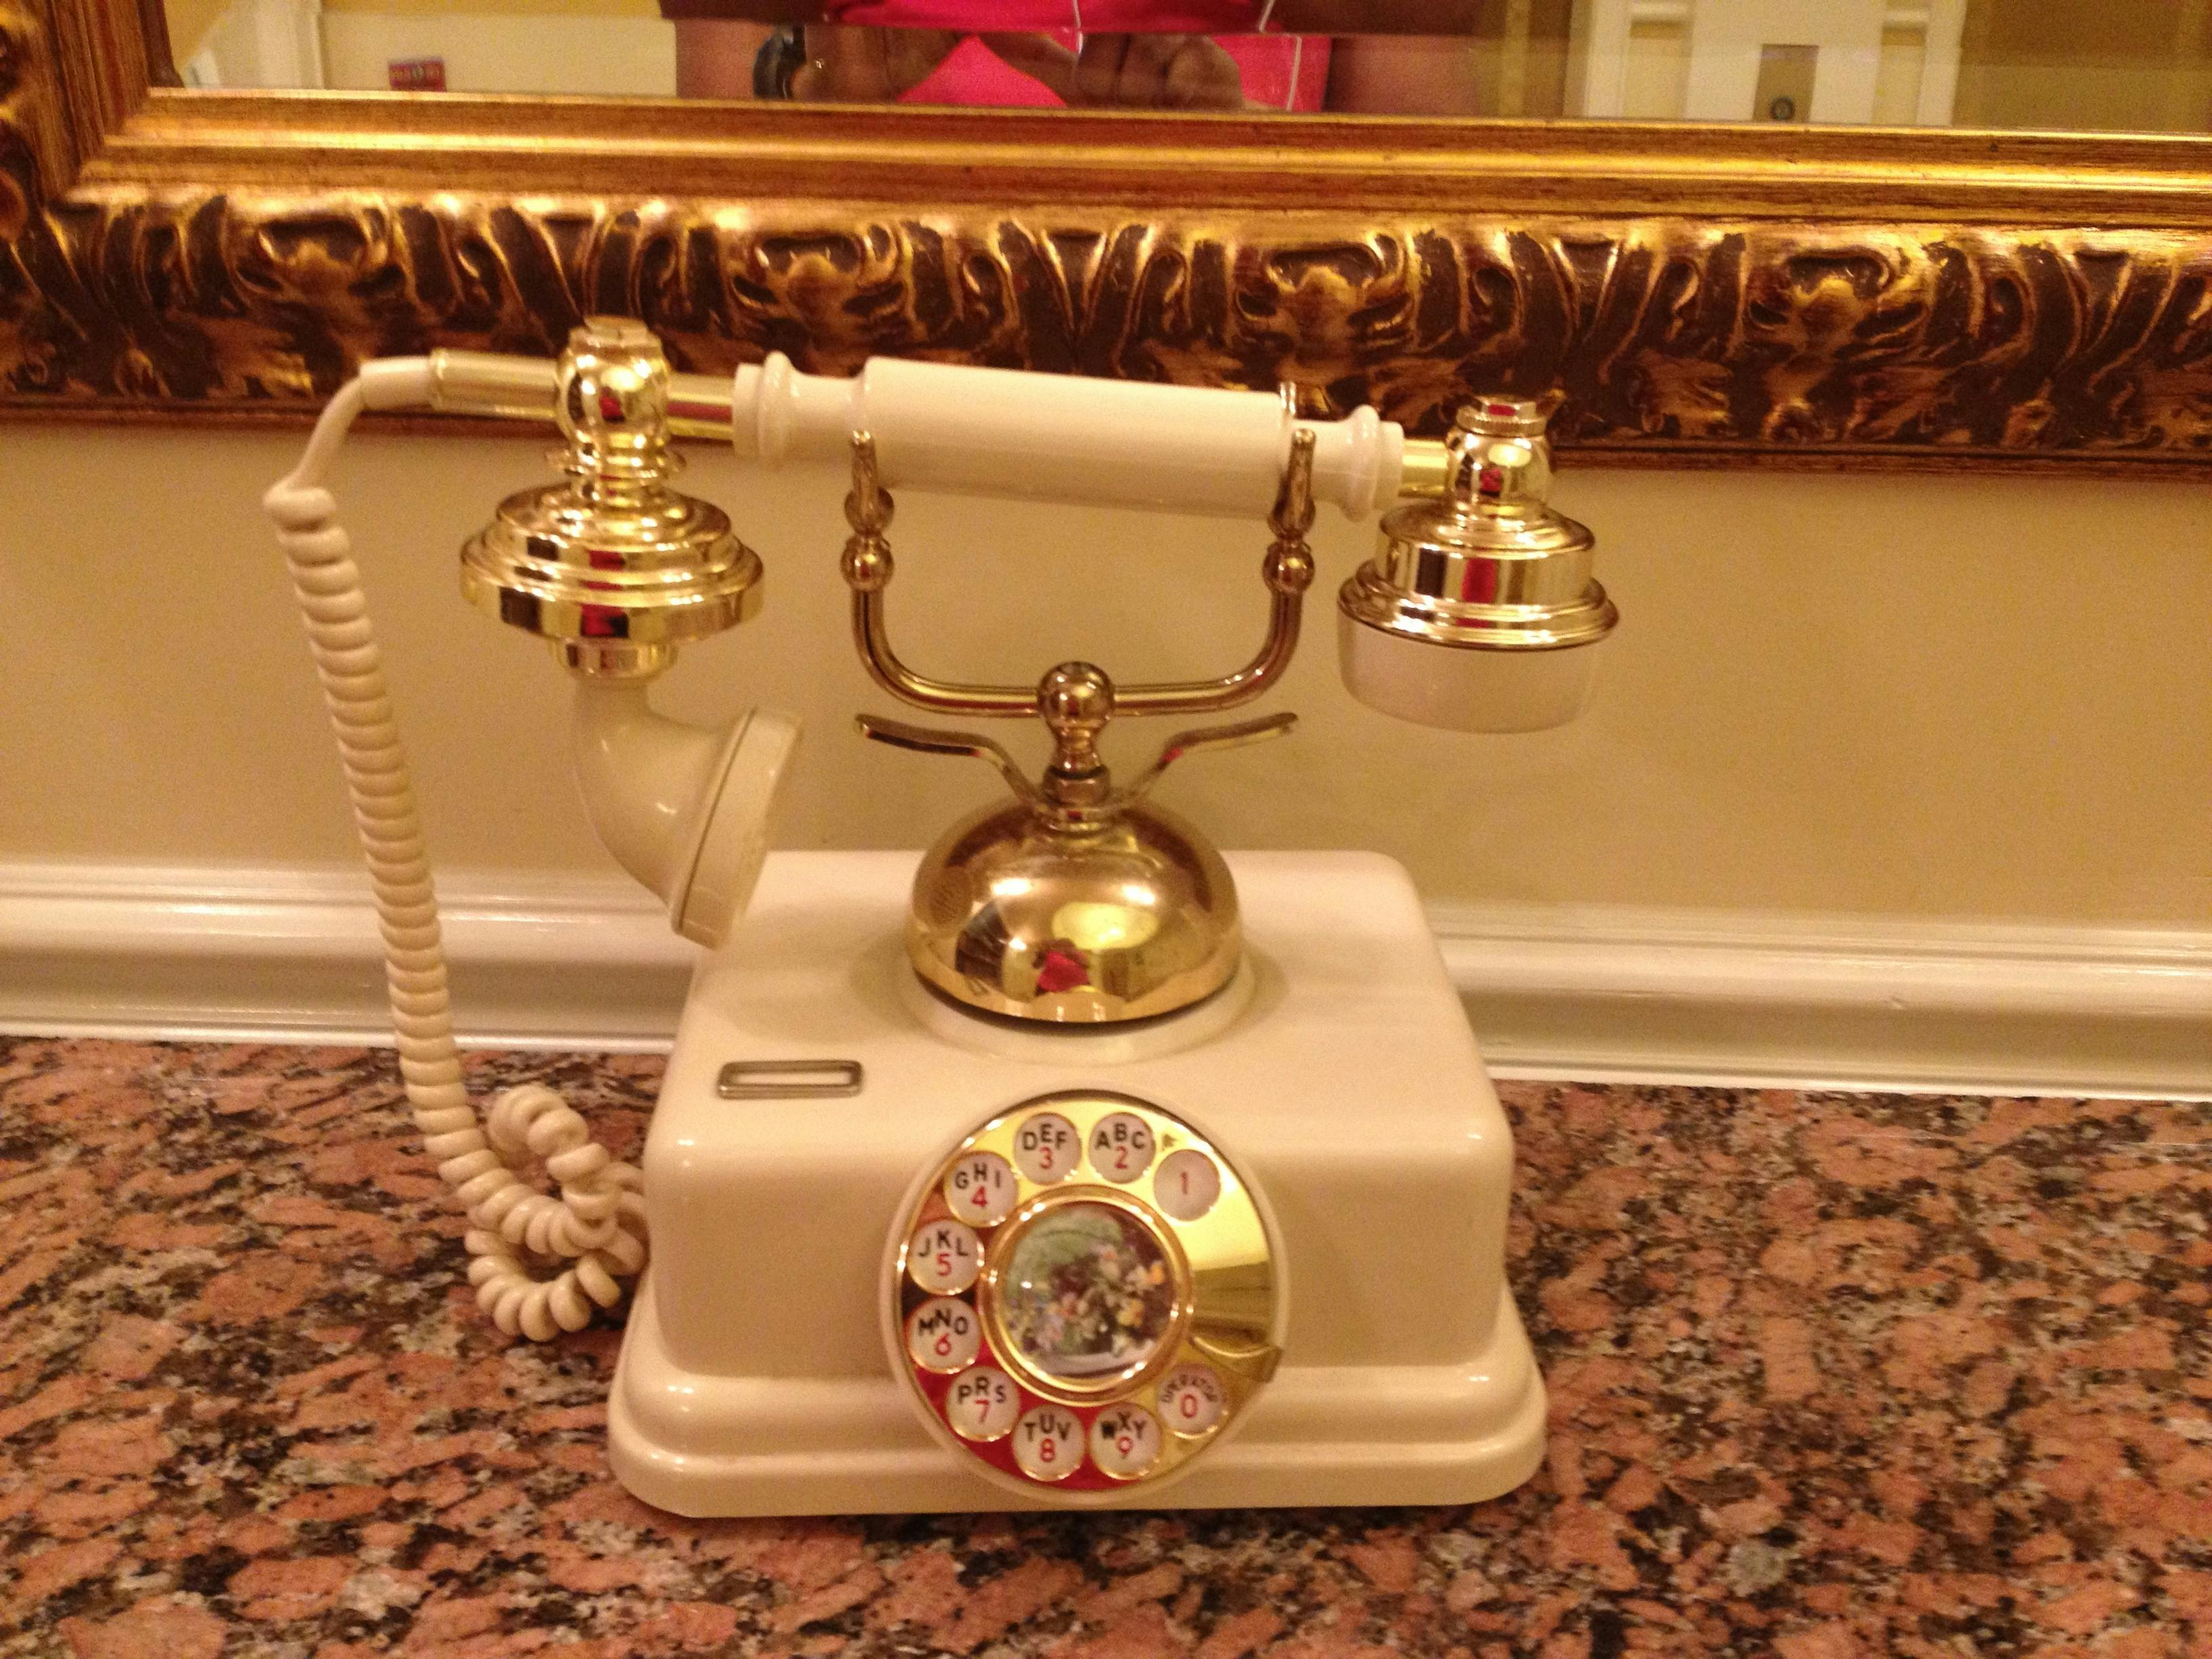 Free stock photo of old school telephone